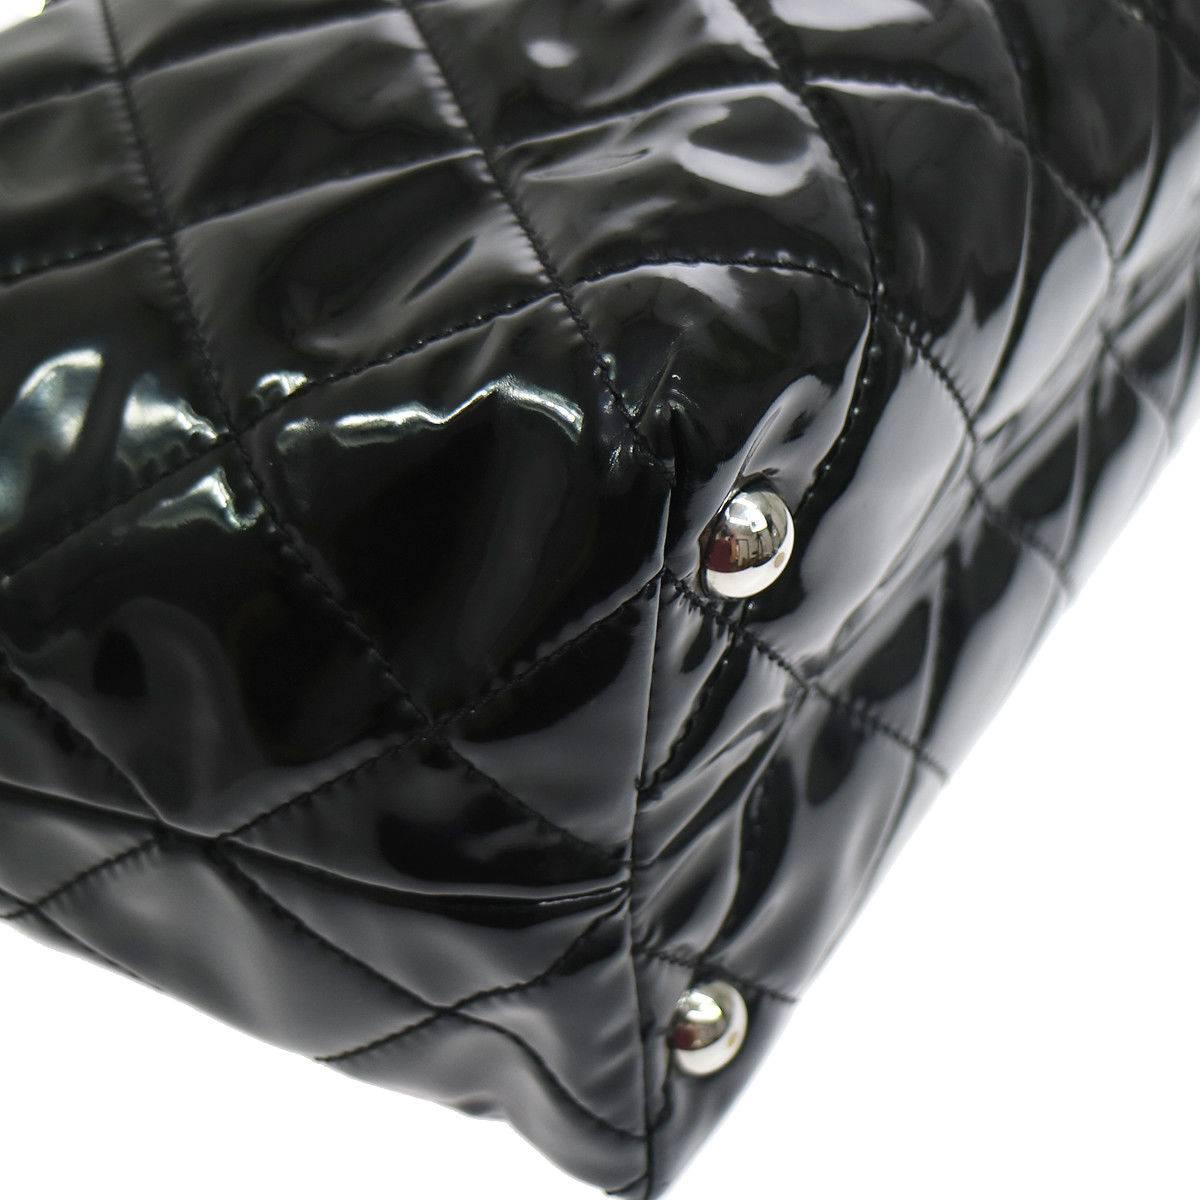 Women's Chanel Black Patent Silver Large Carryall Travel Shopper Bag